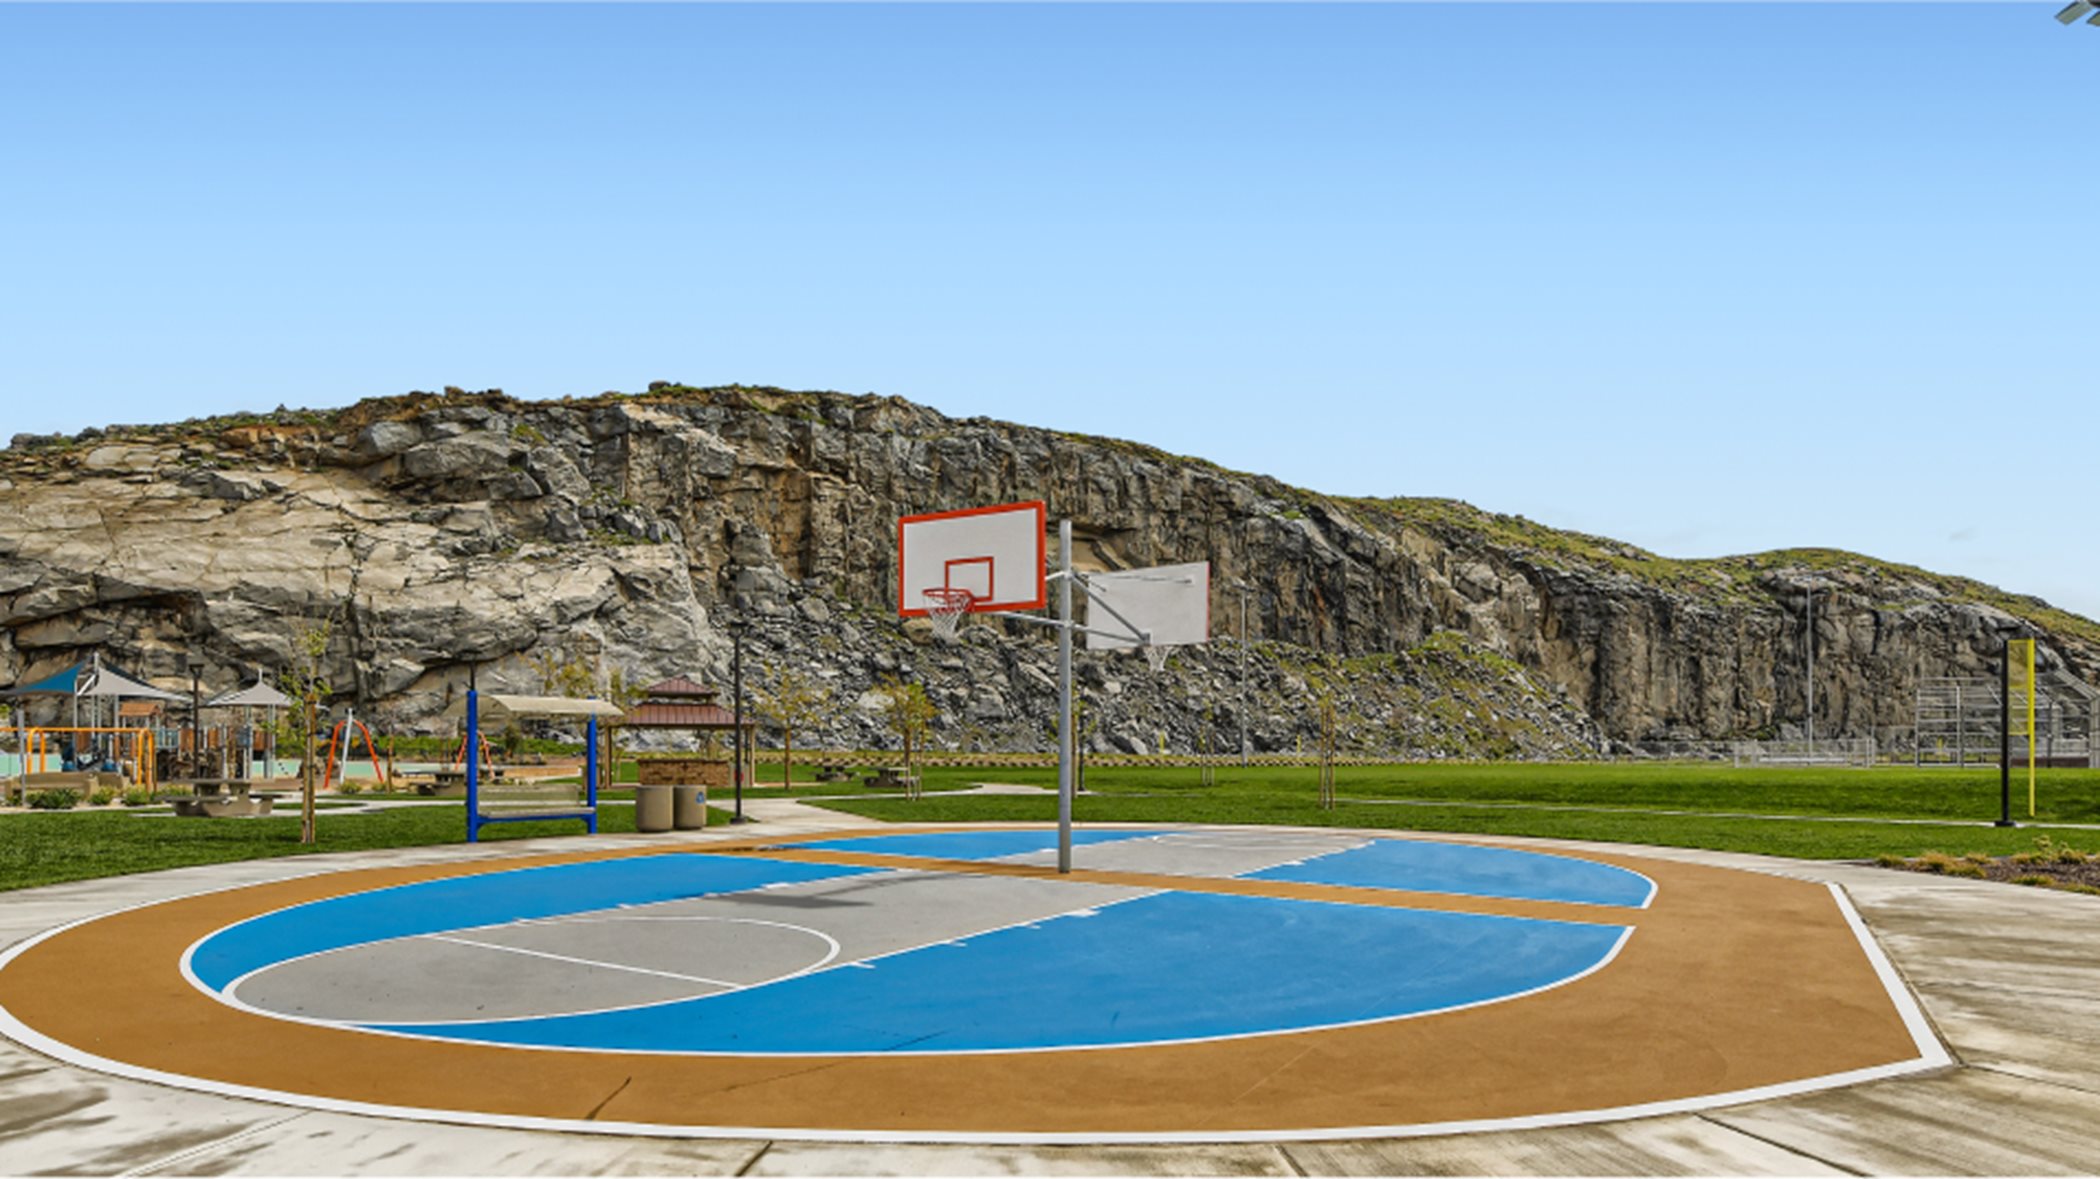 Shadow Rock basketball court amenity